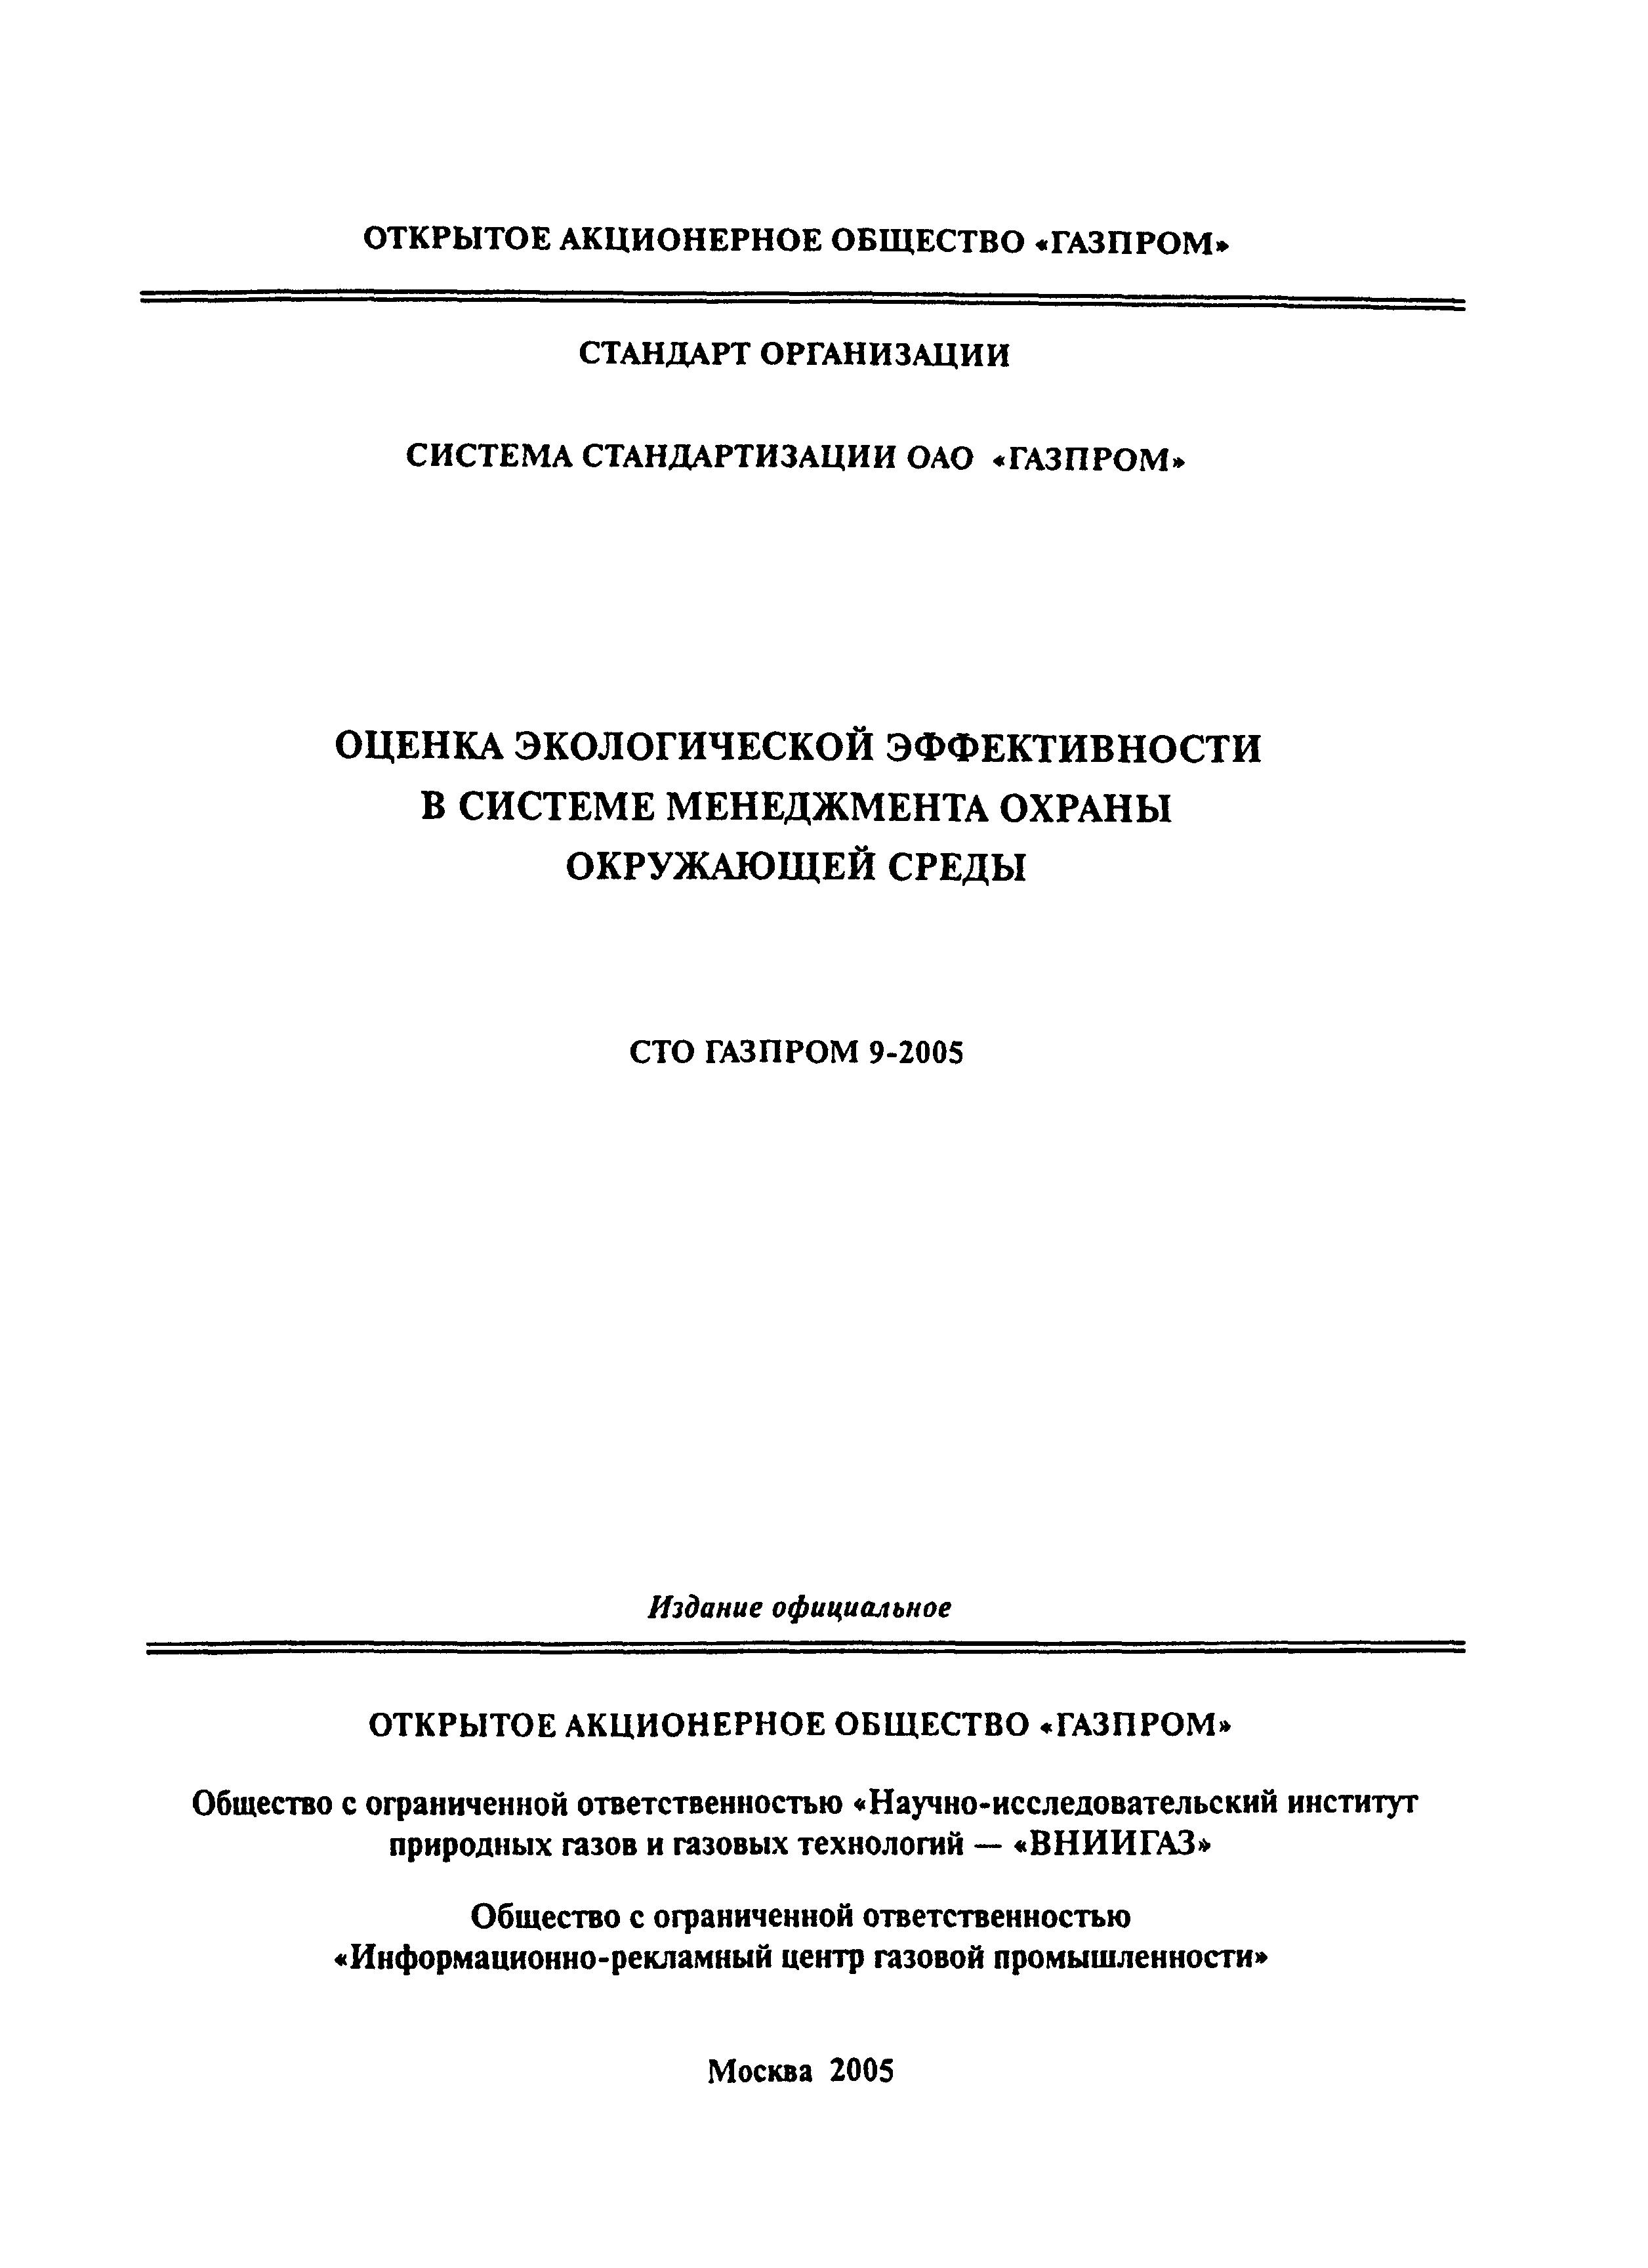 СТО Газпром 9-2005